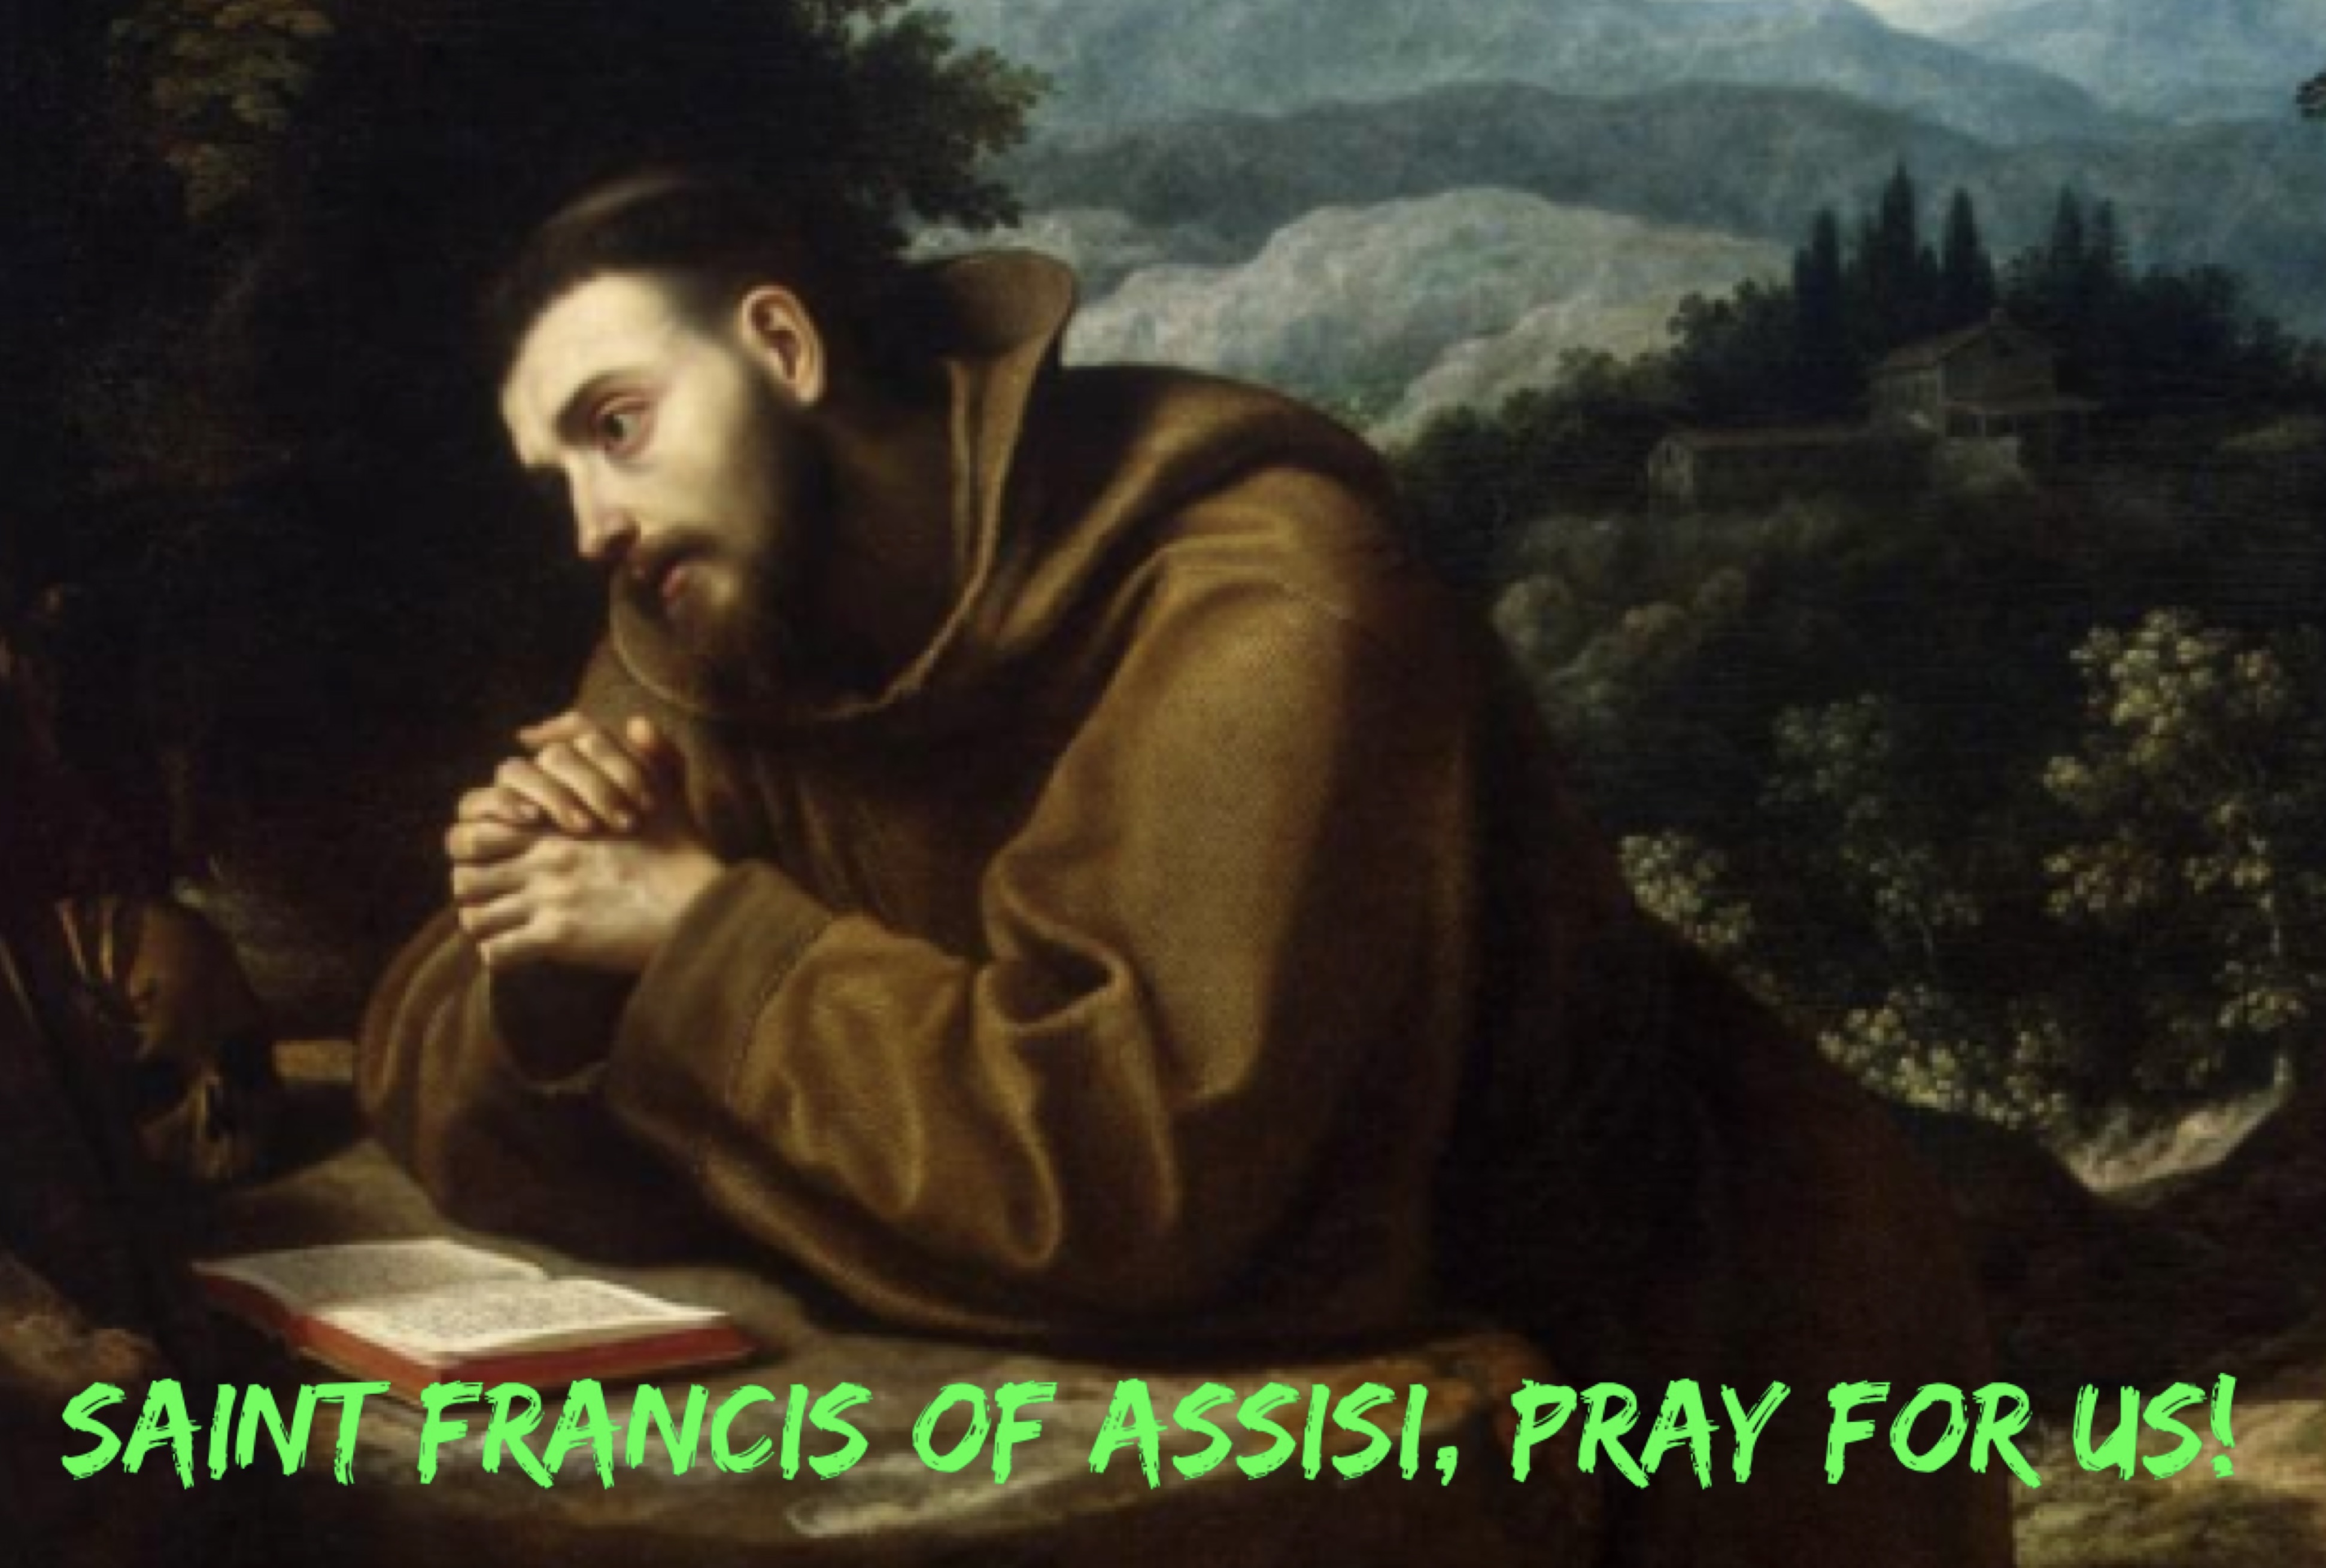 4th October - Saint Francis of Assisi